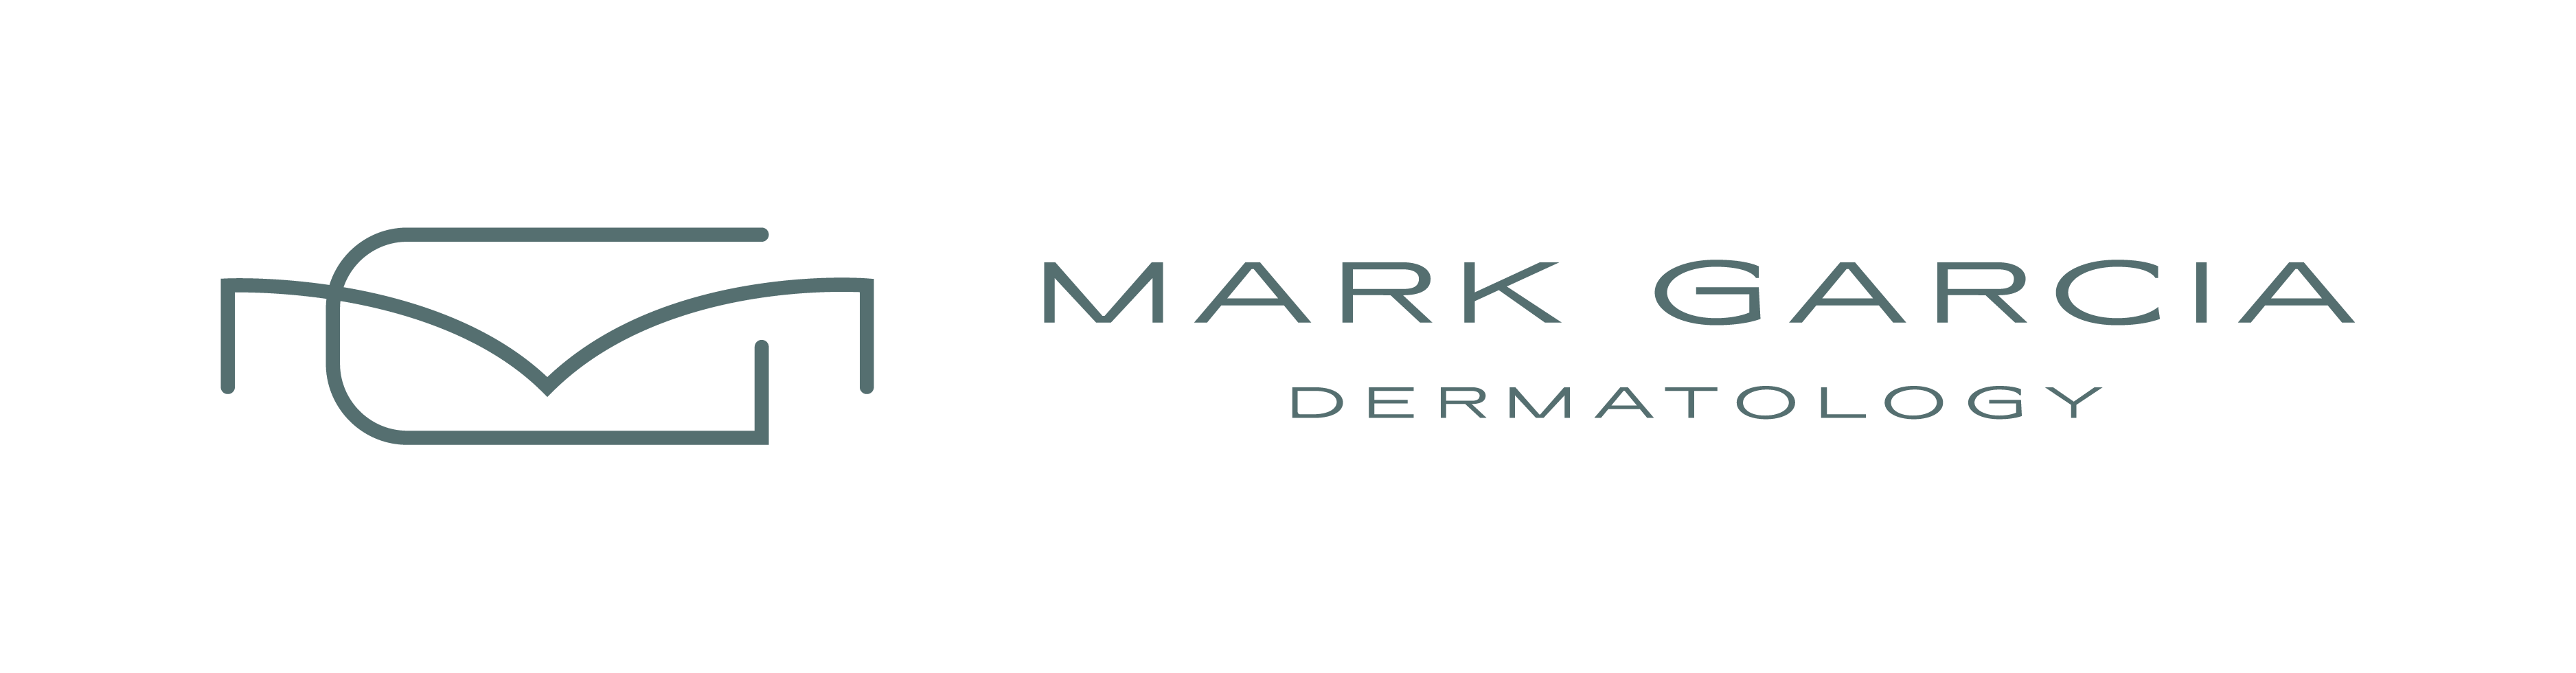 Mark Garcia Dermatology